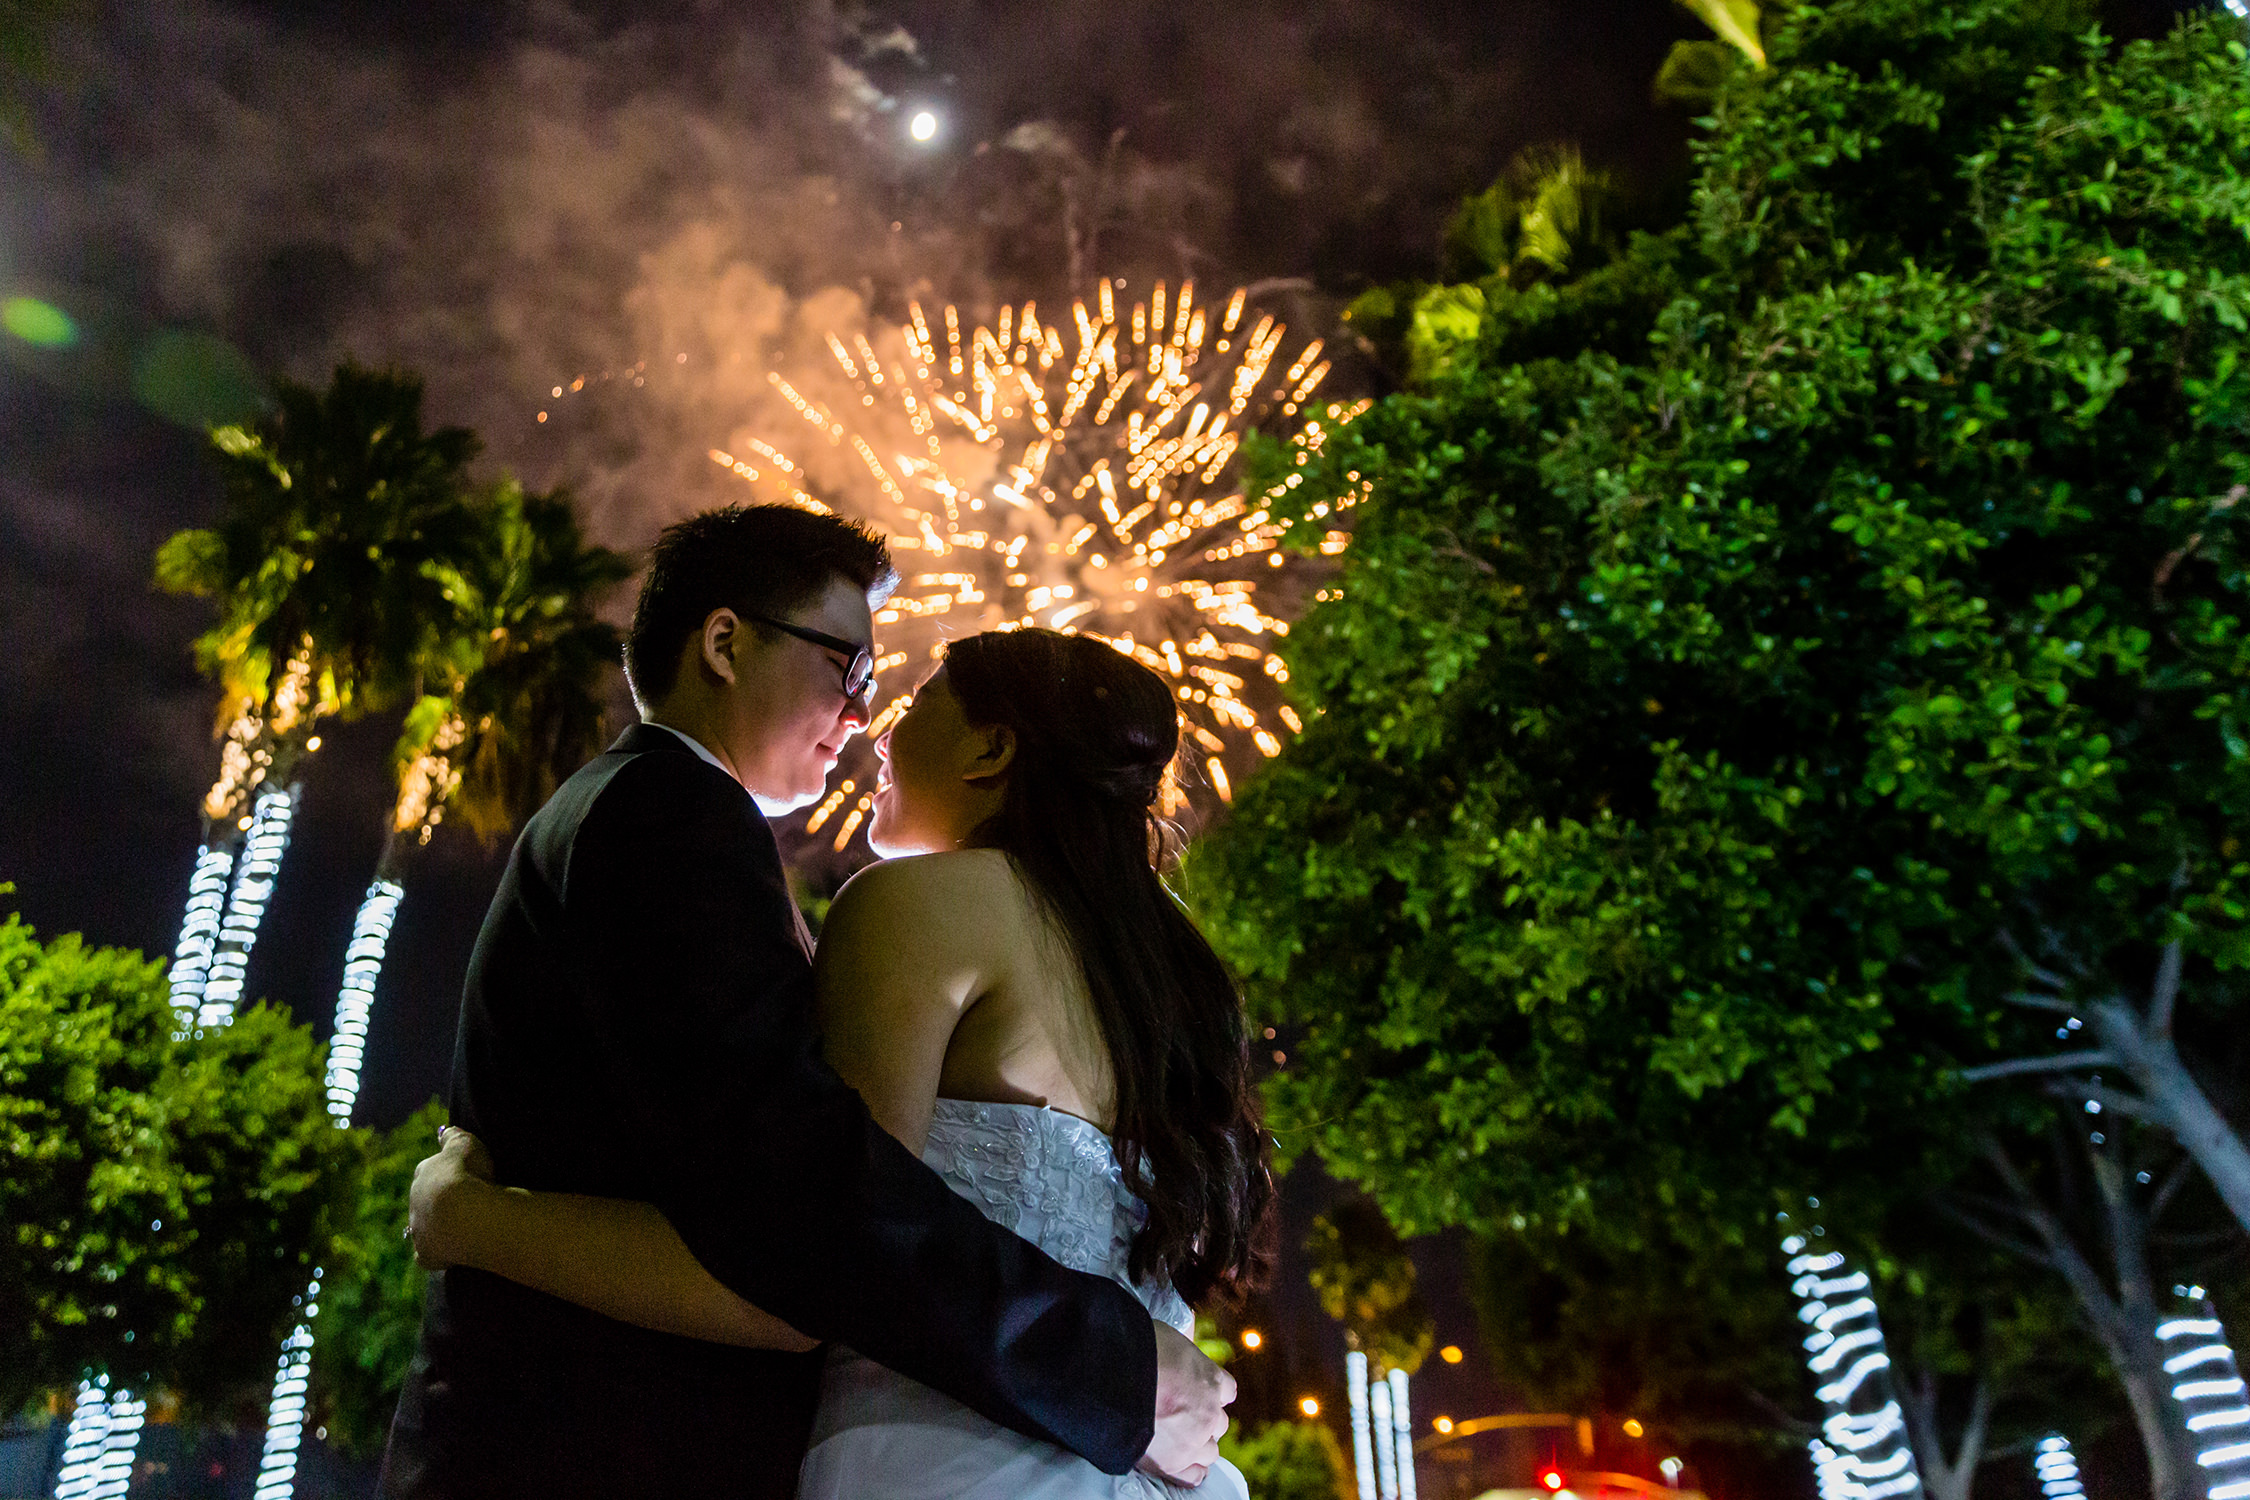 bycphotography anaheim majestic garden hotel anaheim wedding fireworks